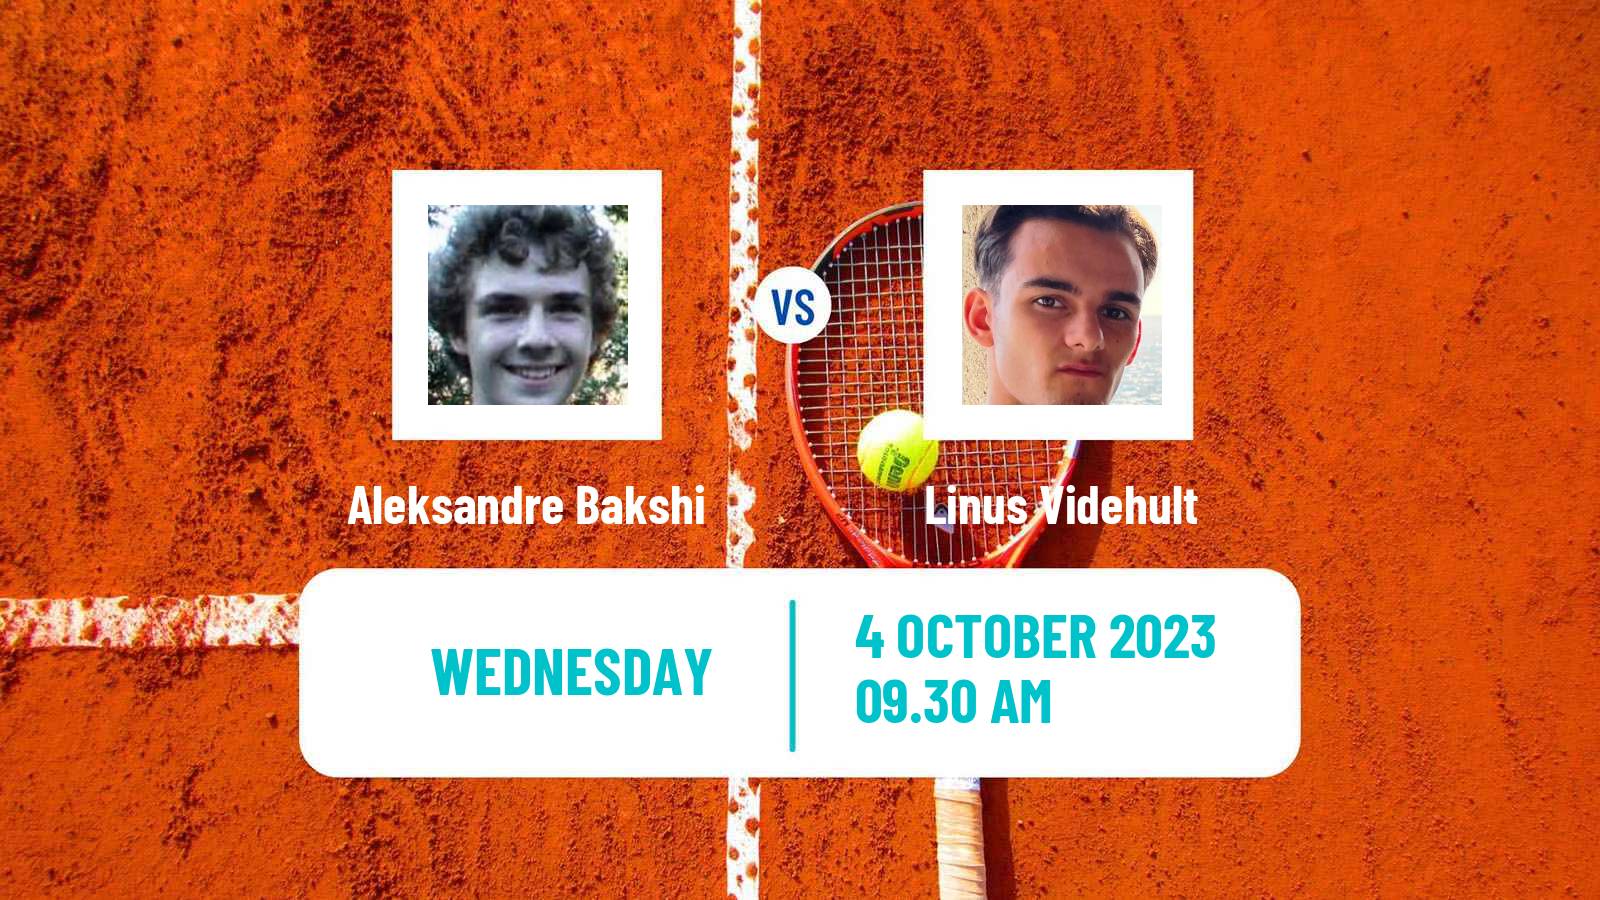 Tennis ITF M15 Doha 2 Men Aleksandre Bakshi - Linus Videhult